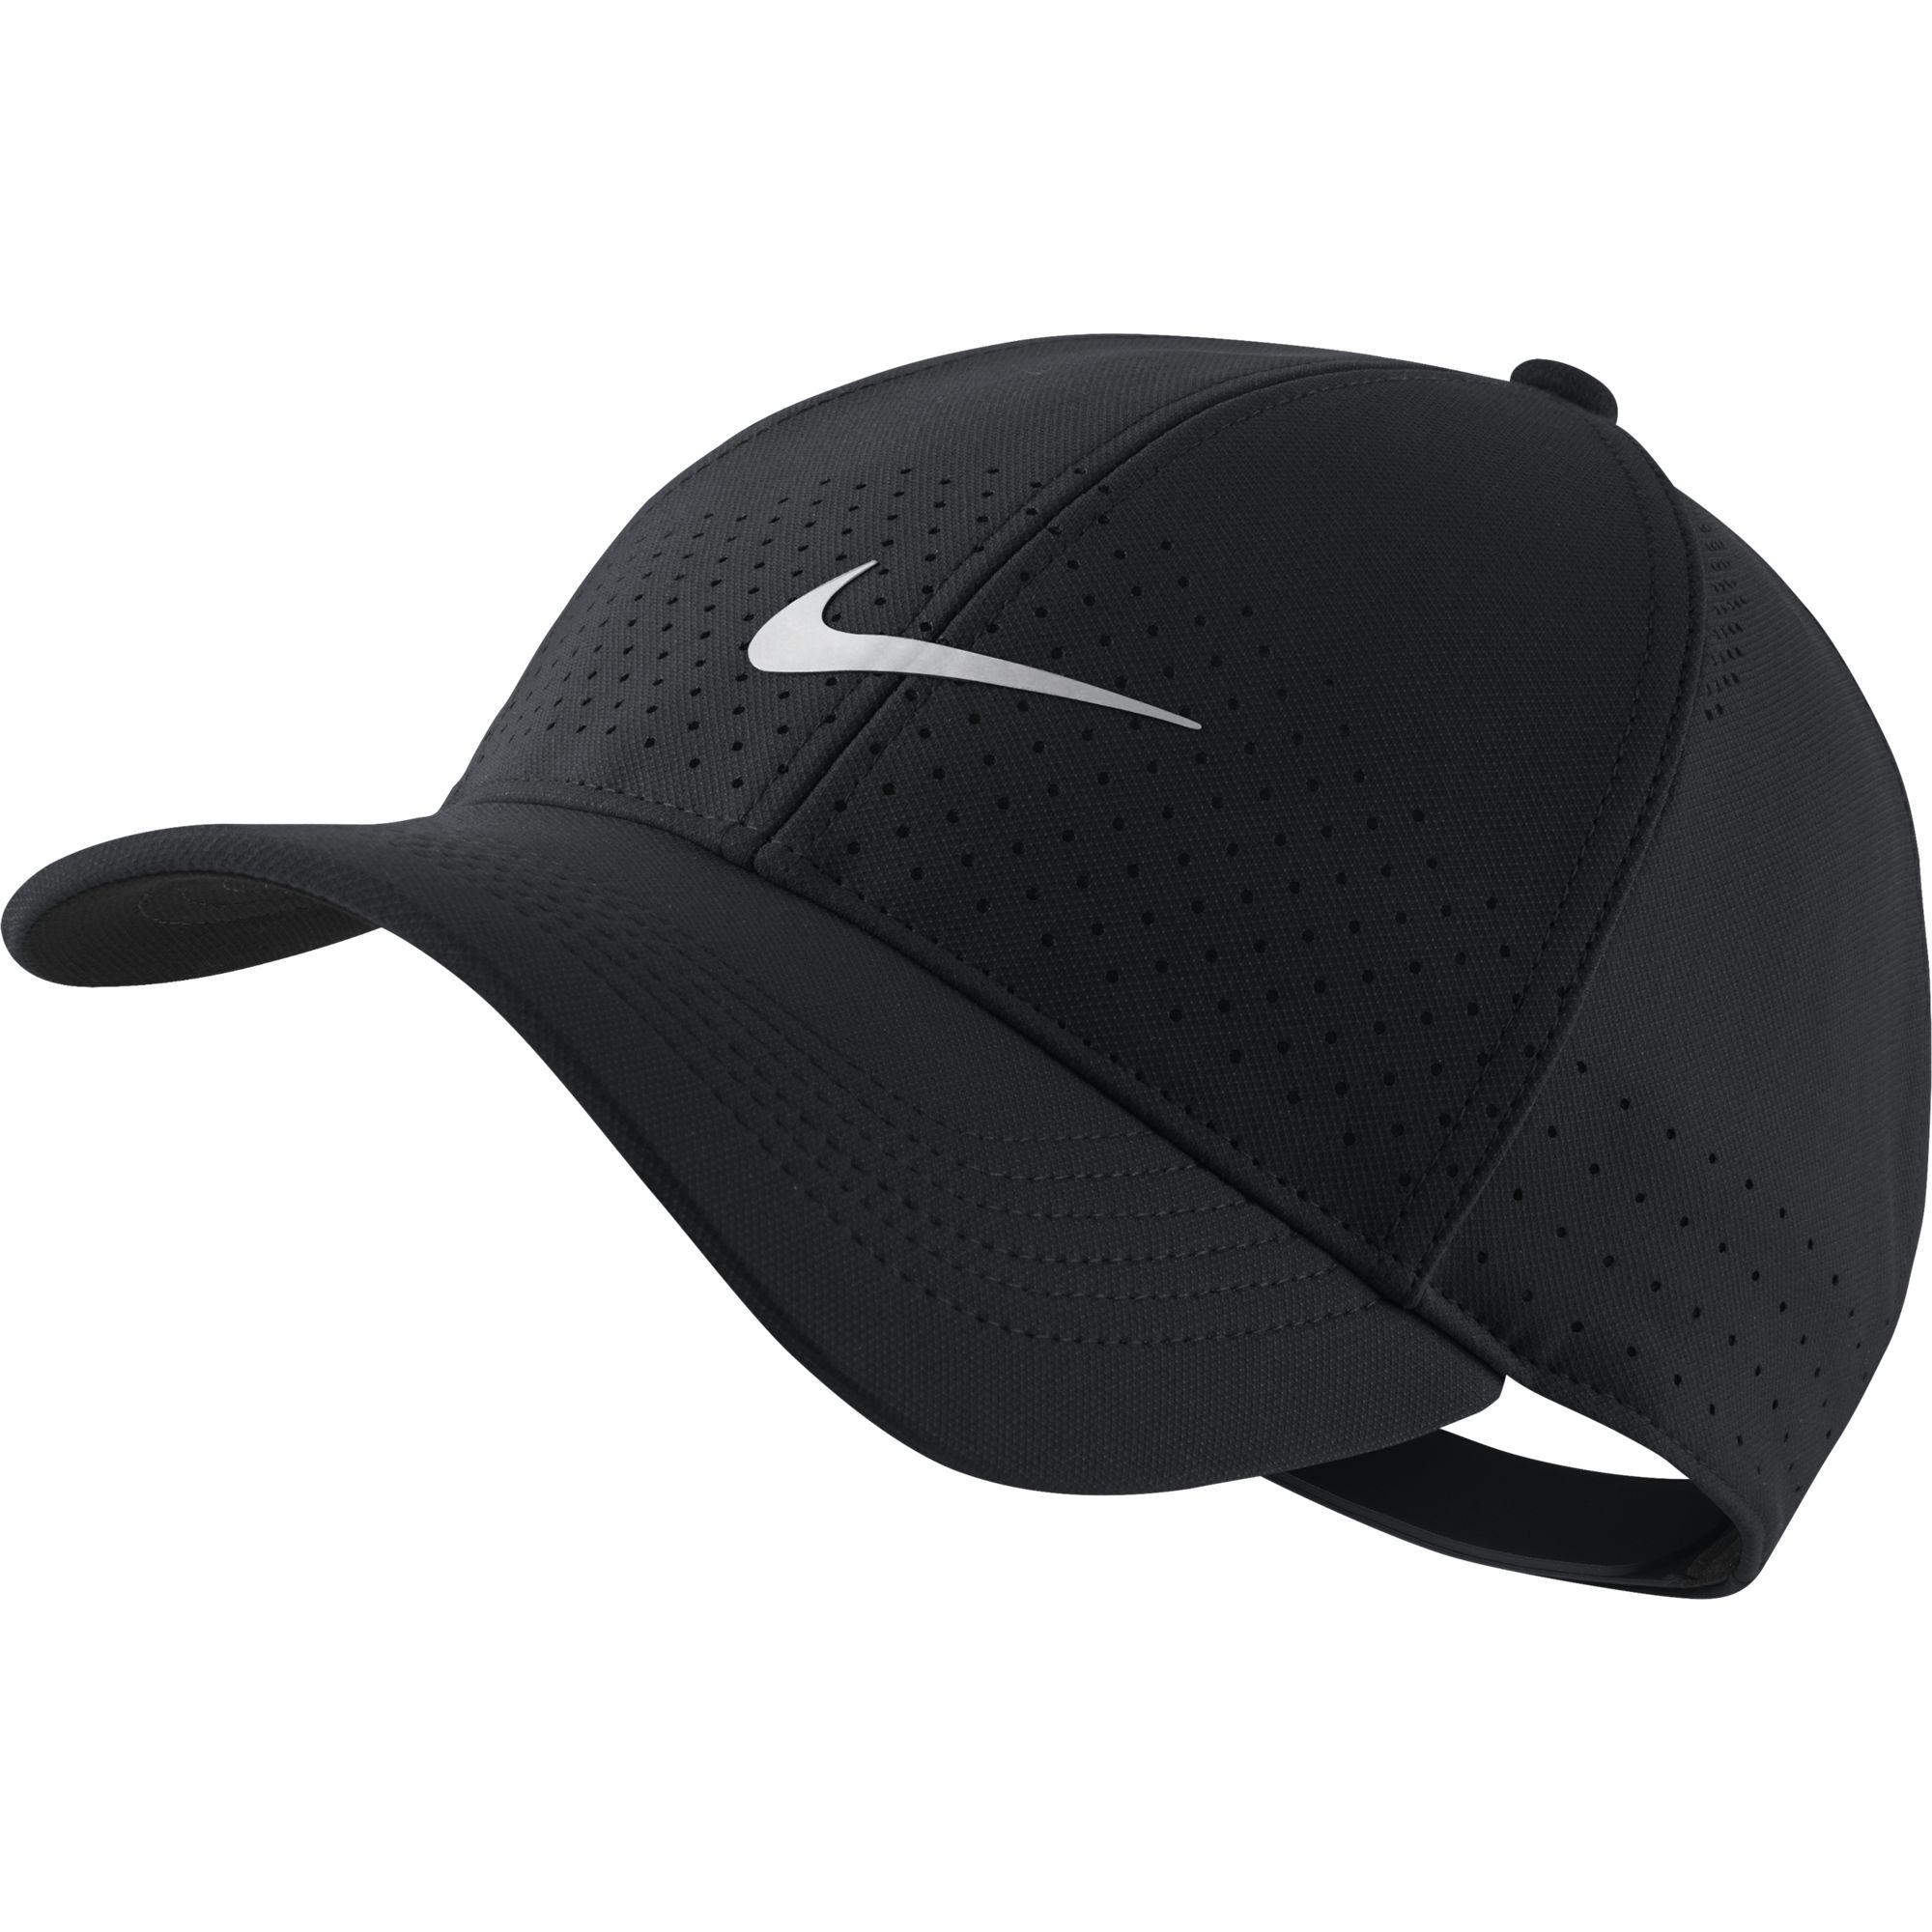 Nike AeroBill Legacy 91 Adjustable Tennis Cap - Black - Tennisnuts.com